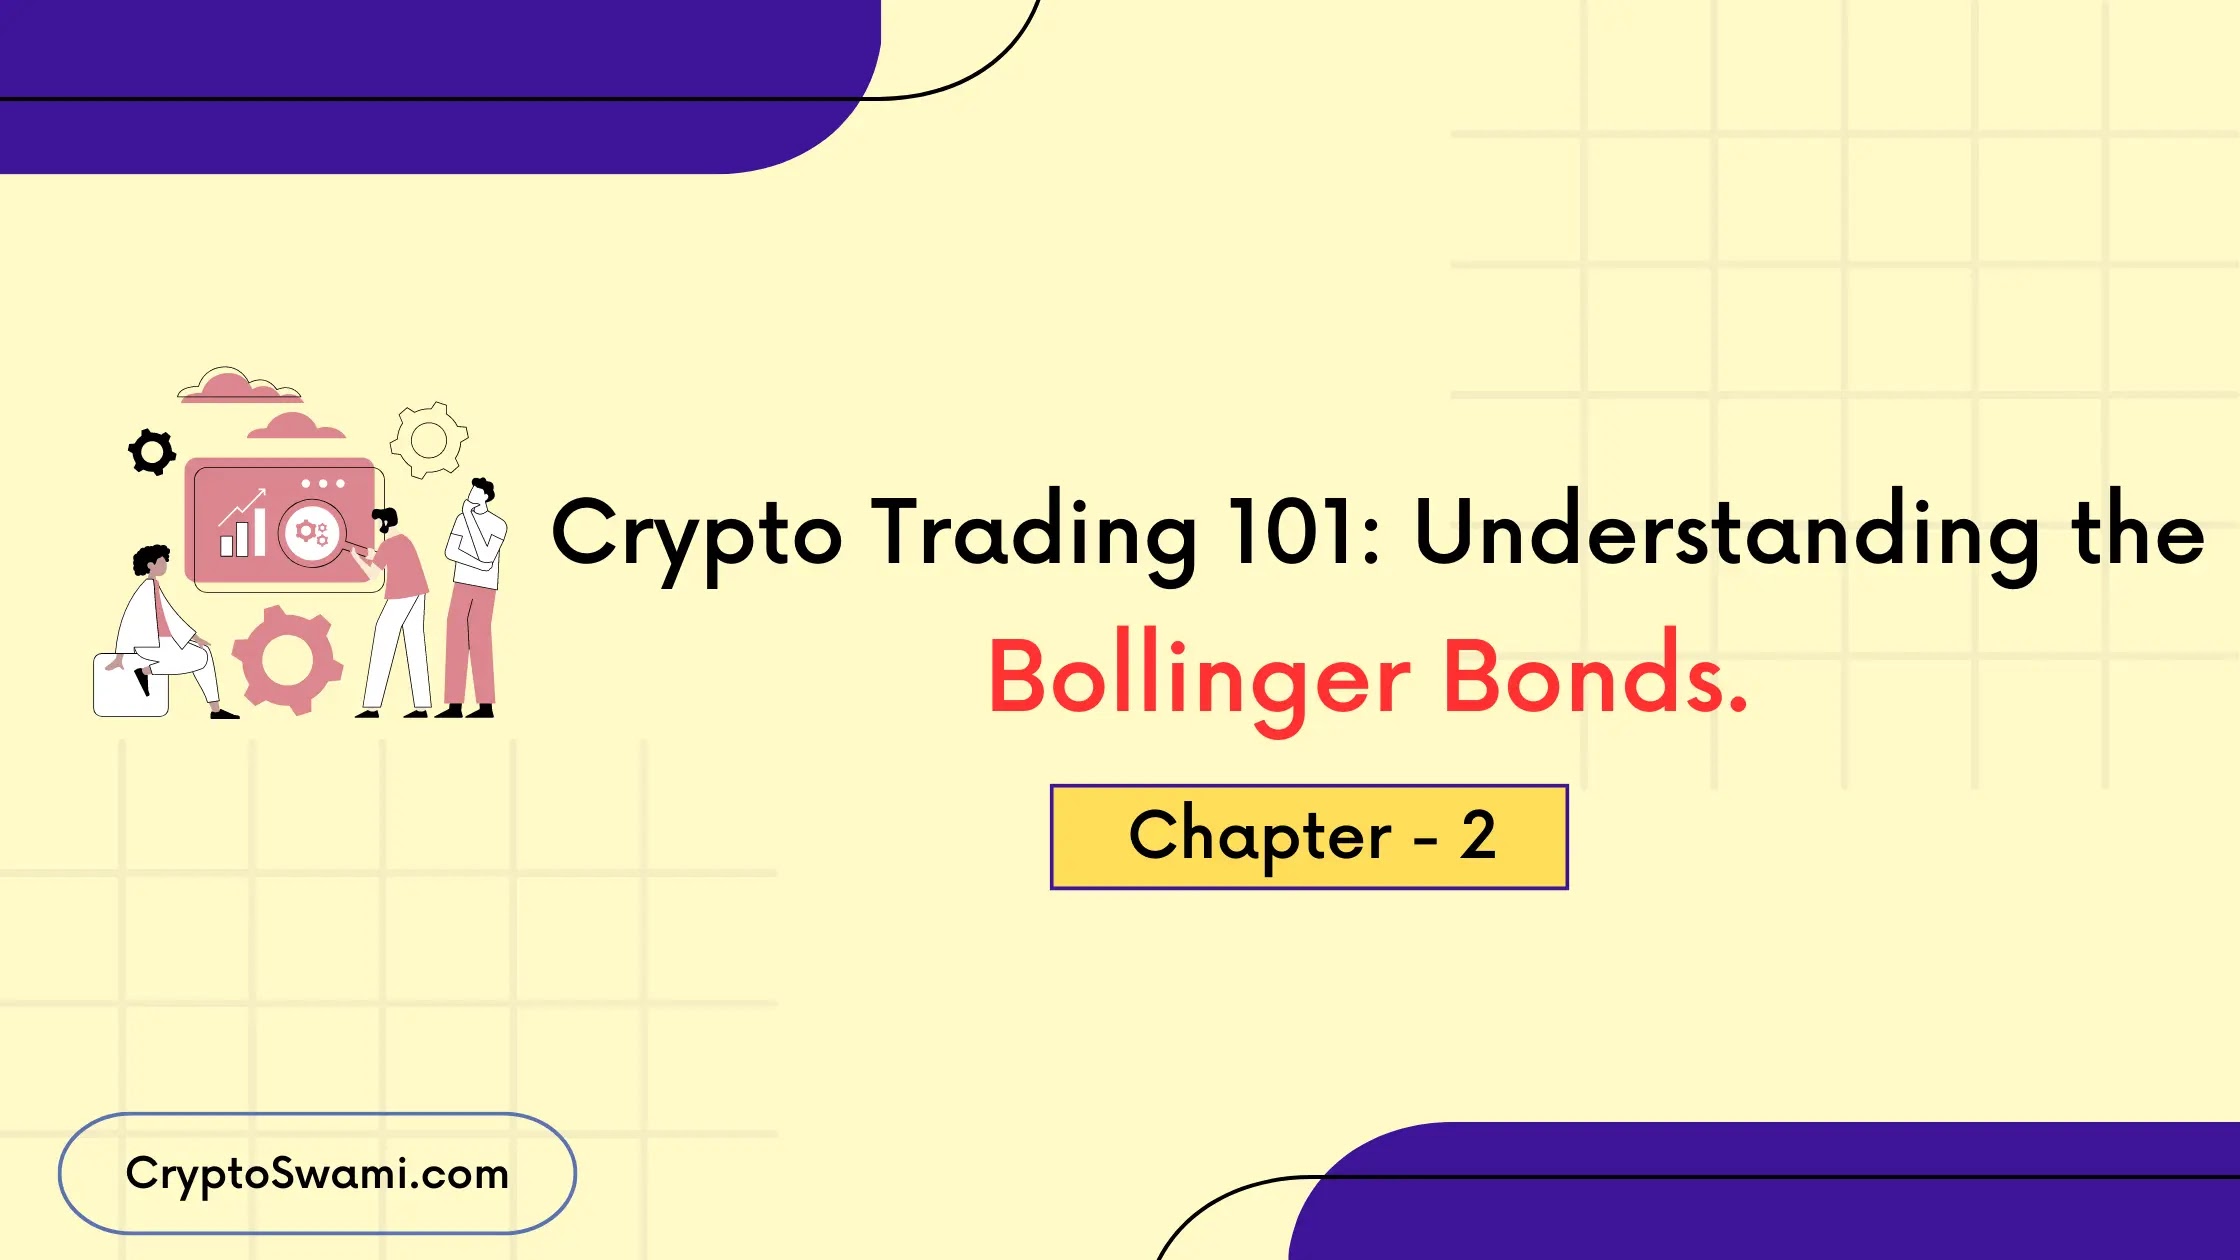 bollinger bands, crypto trading, bitcoin